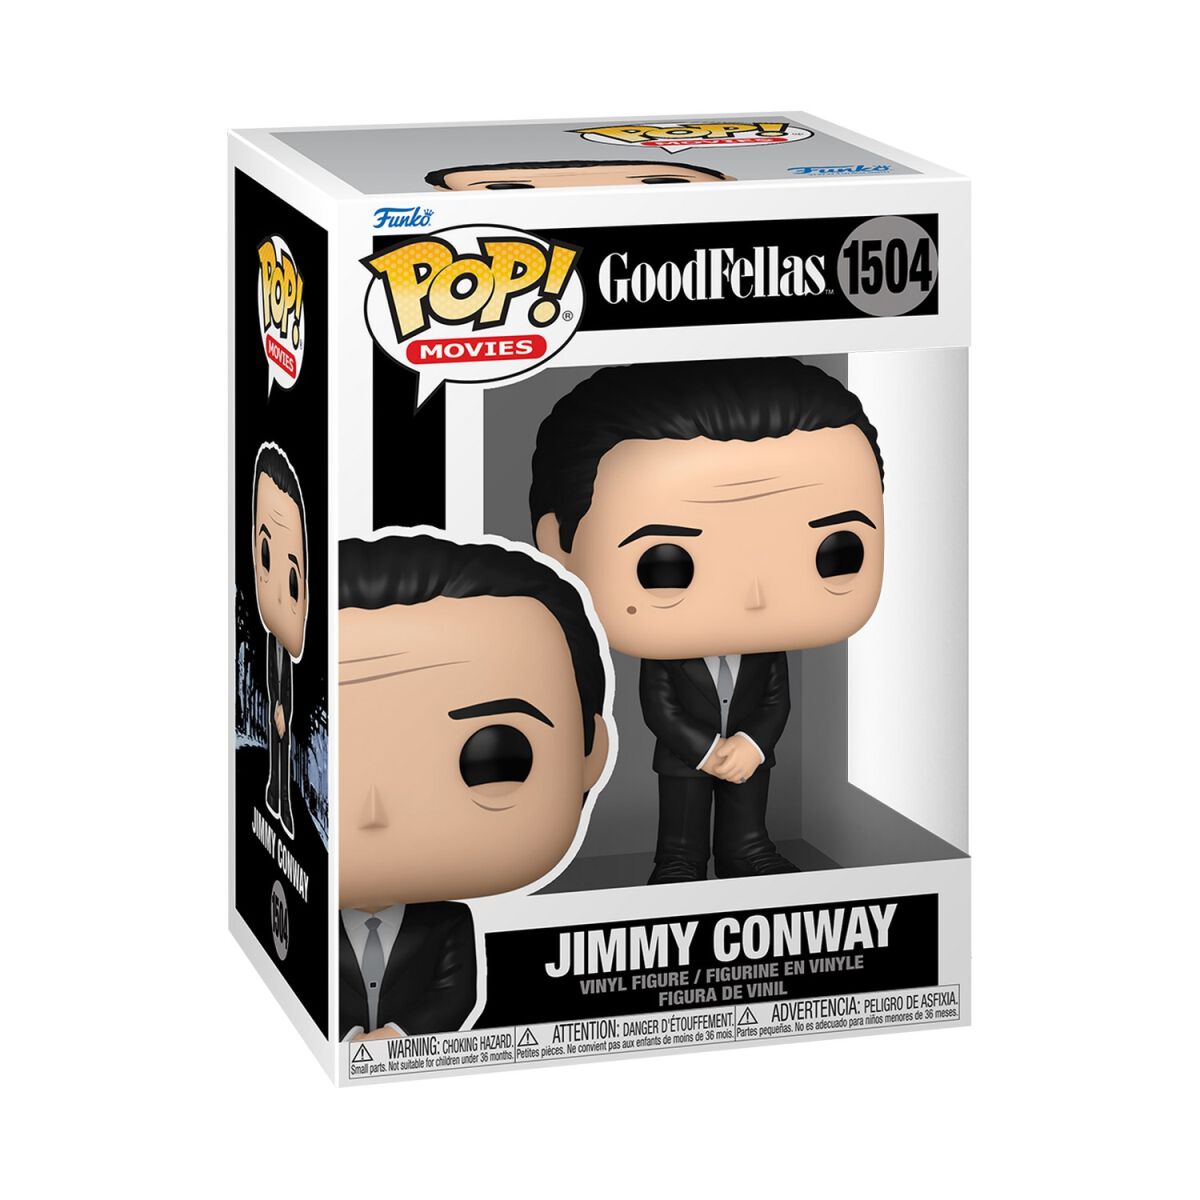 Goodfellas - Jimmy Conway Vinyl Figur 1504 - Funko Pop! Figur - multicolor